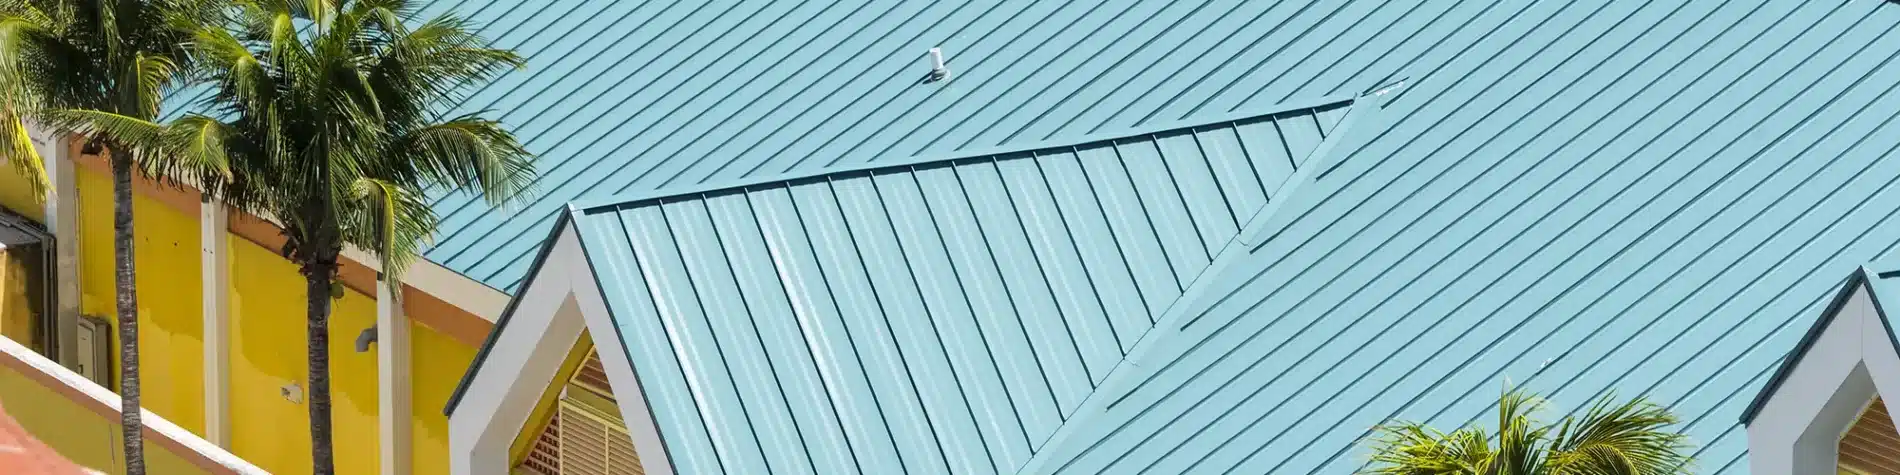 Metal Roof in Florida